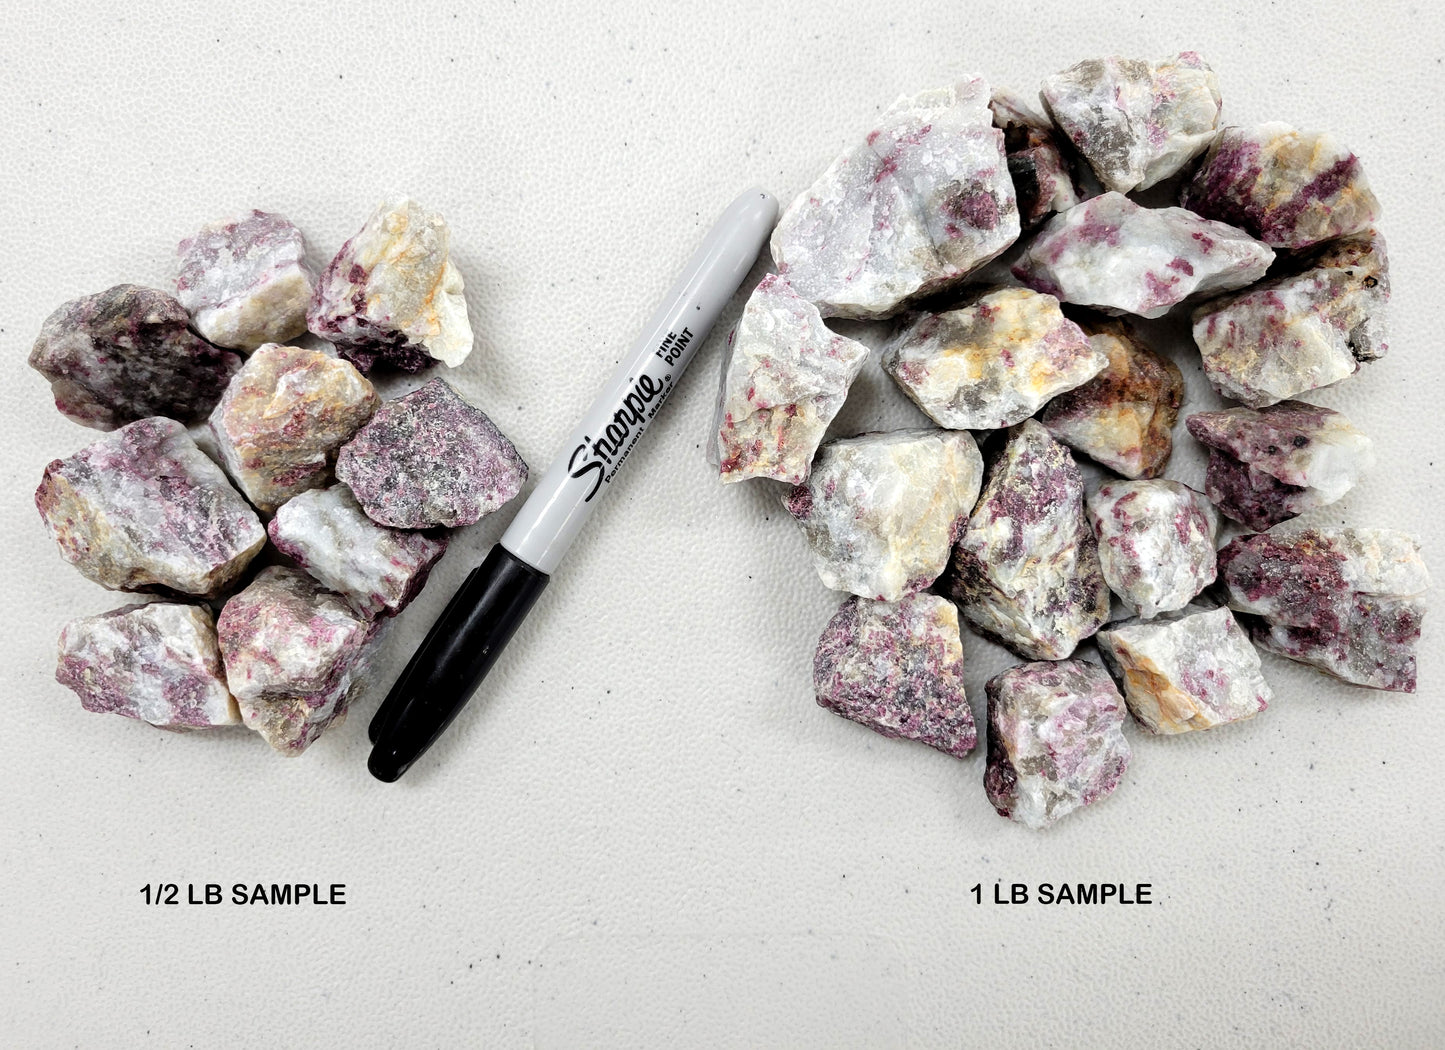 Rubellite Tourmaline Crystals - Rough Stones Bulk